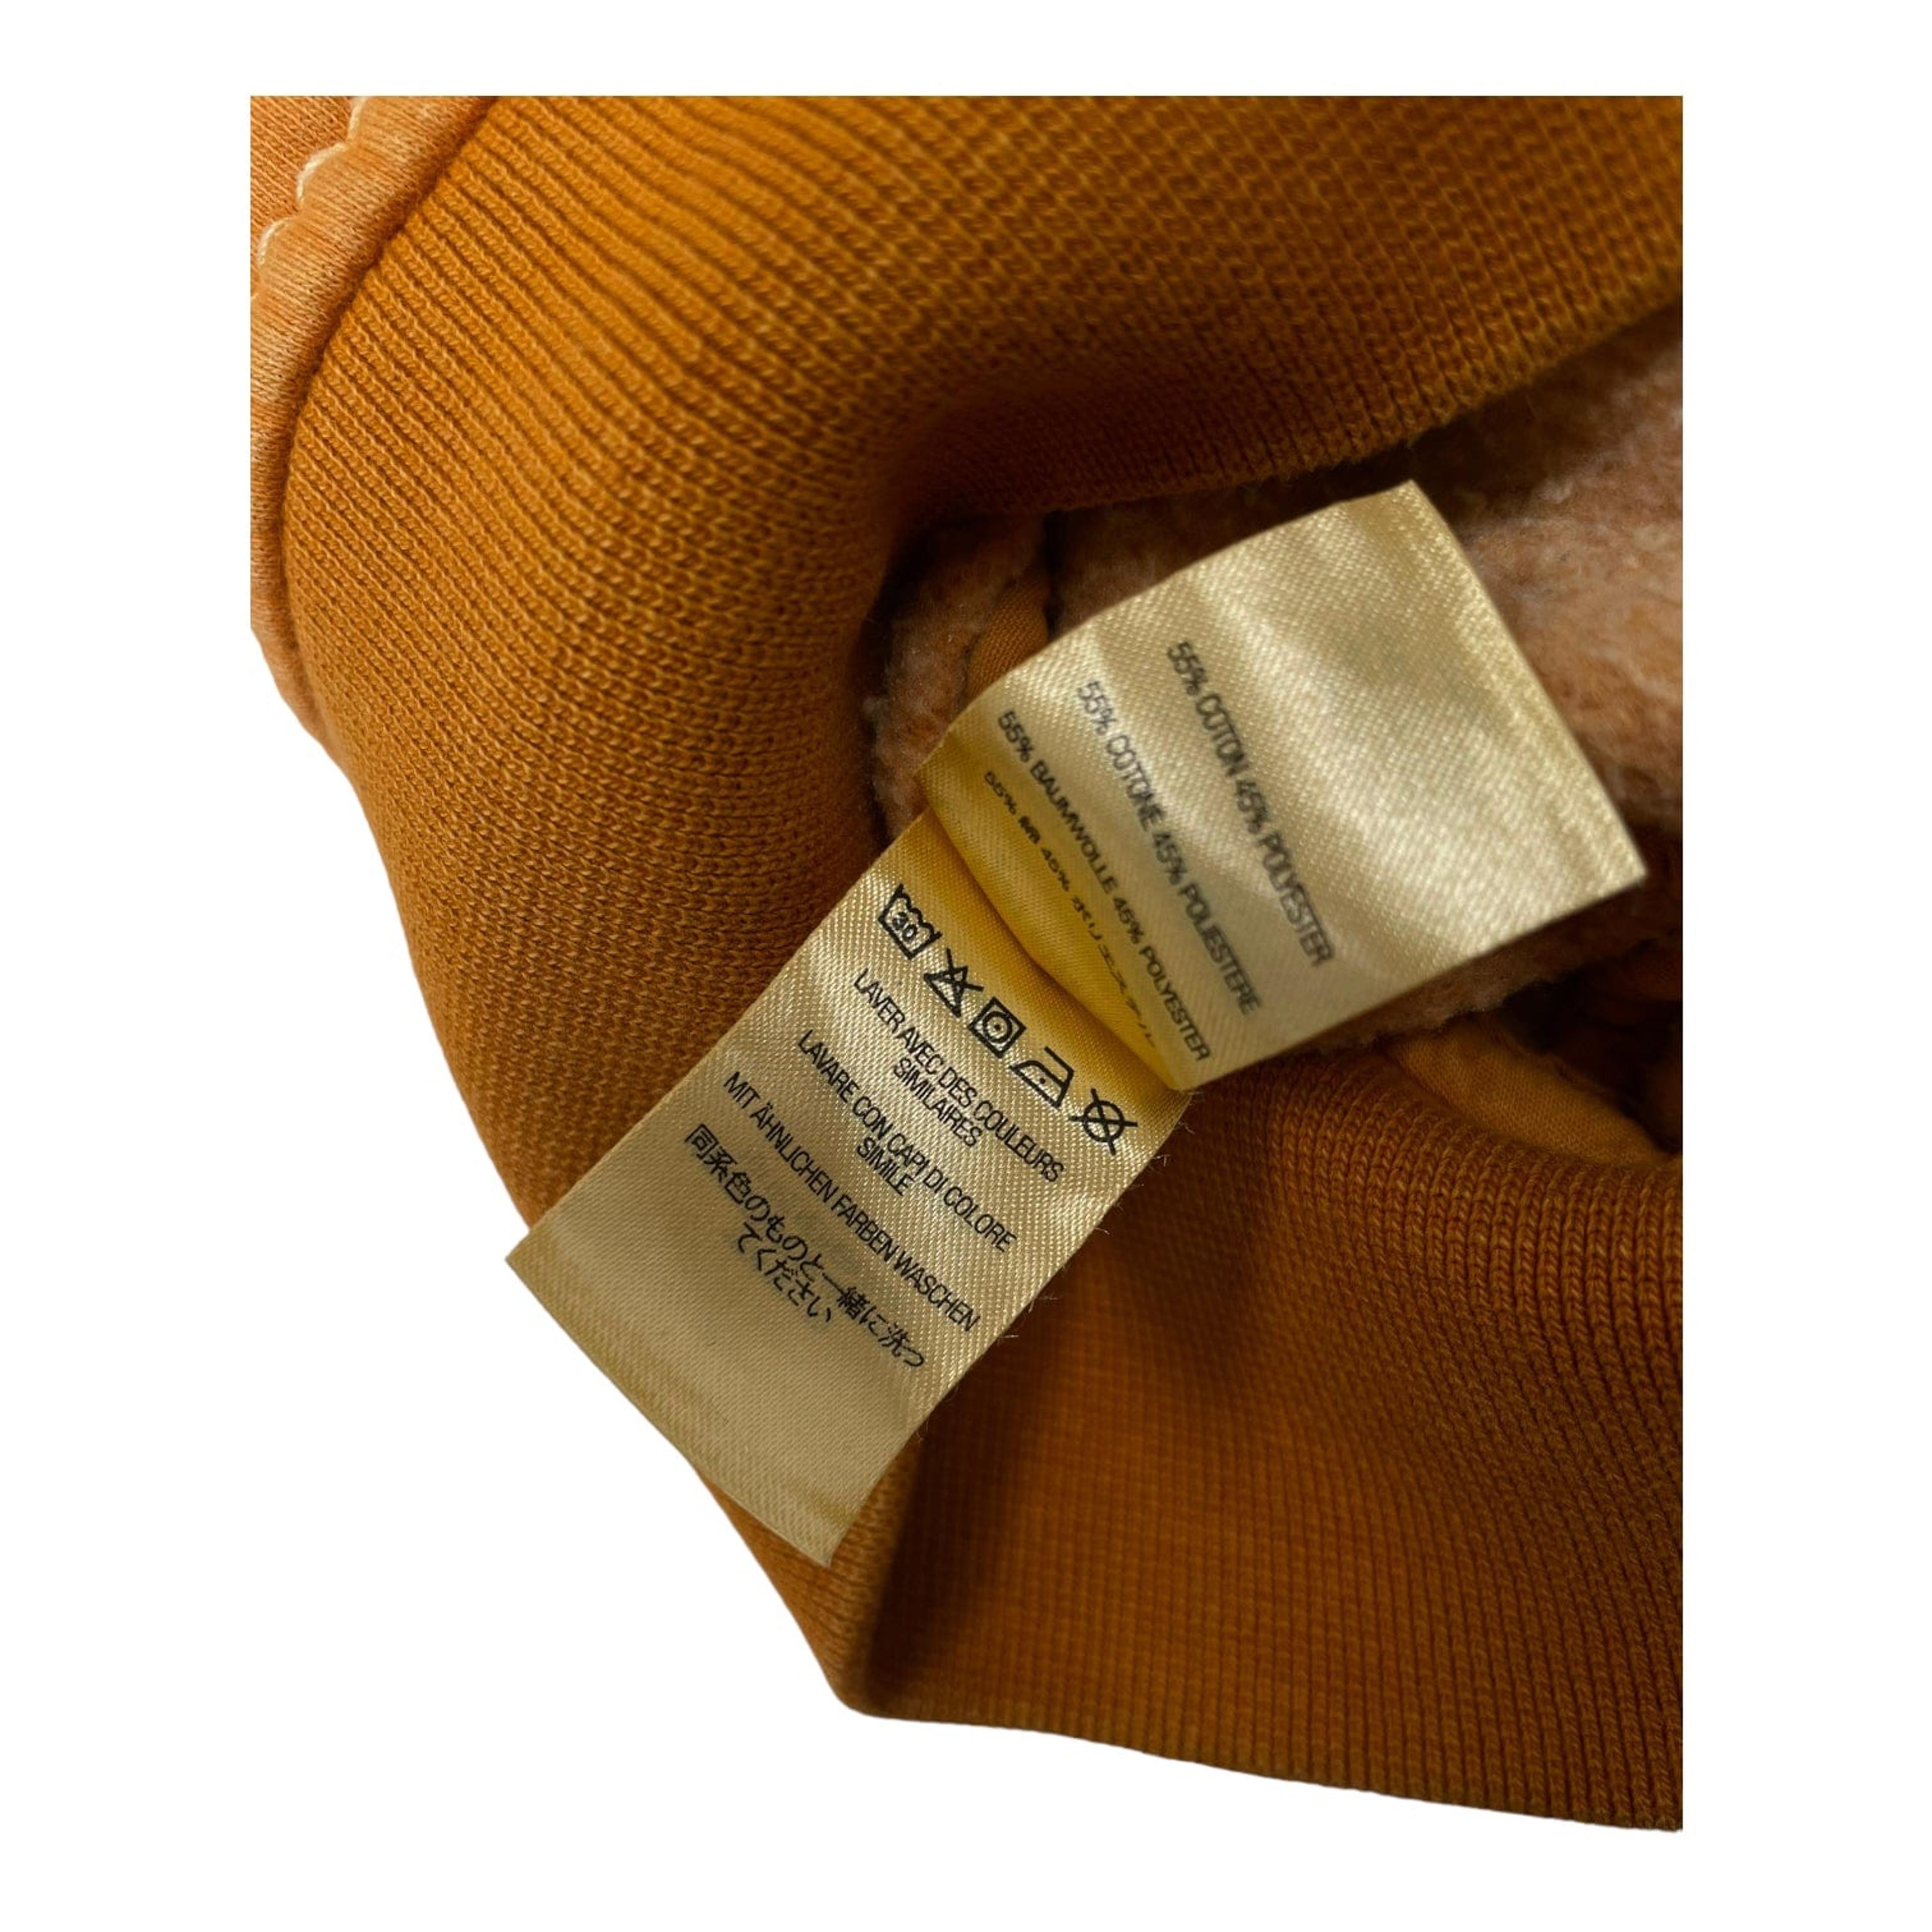 Alternate View 2 of Supreme True Religion Zip Up Hooded Sweatshirt Dusty Orange Pre-